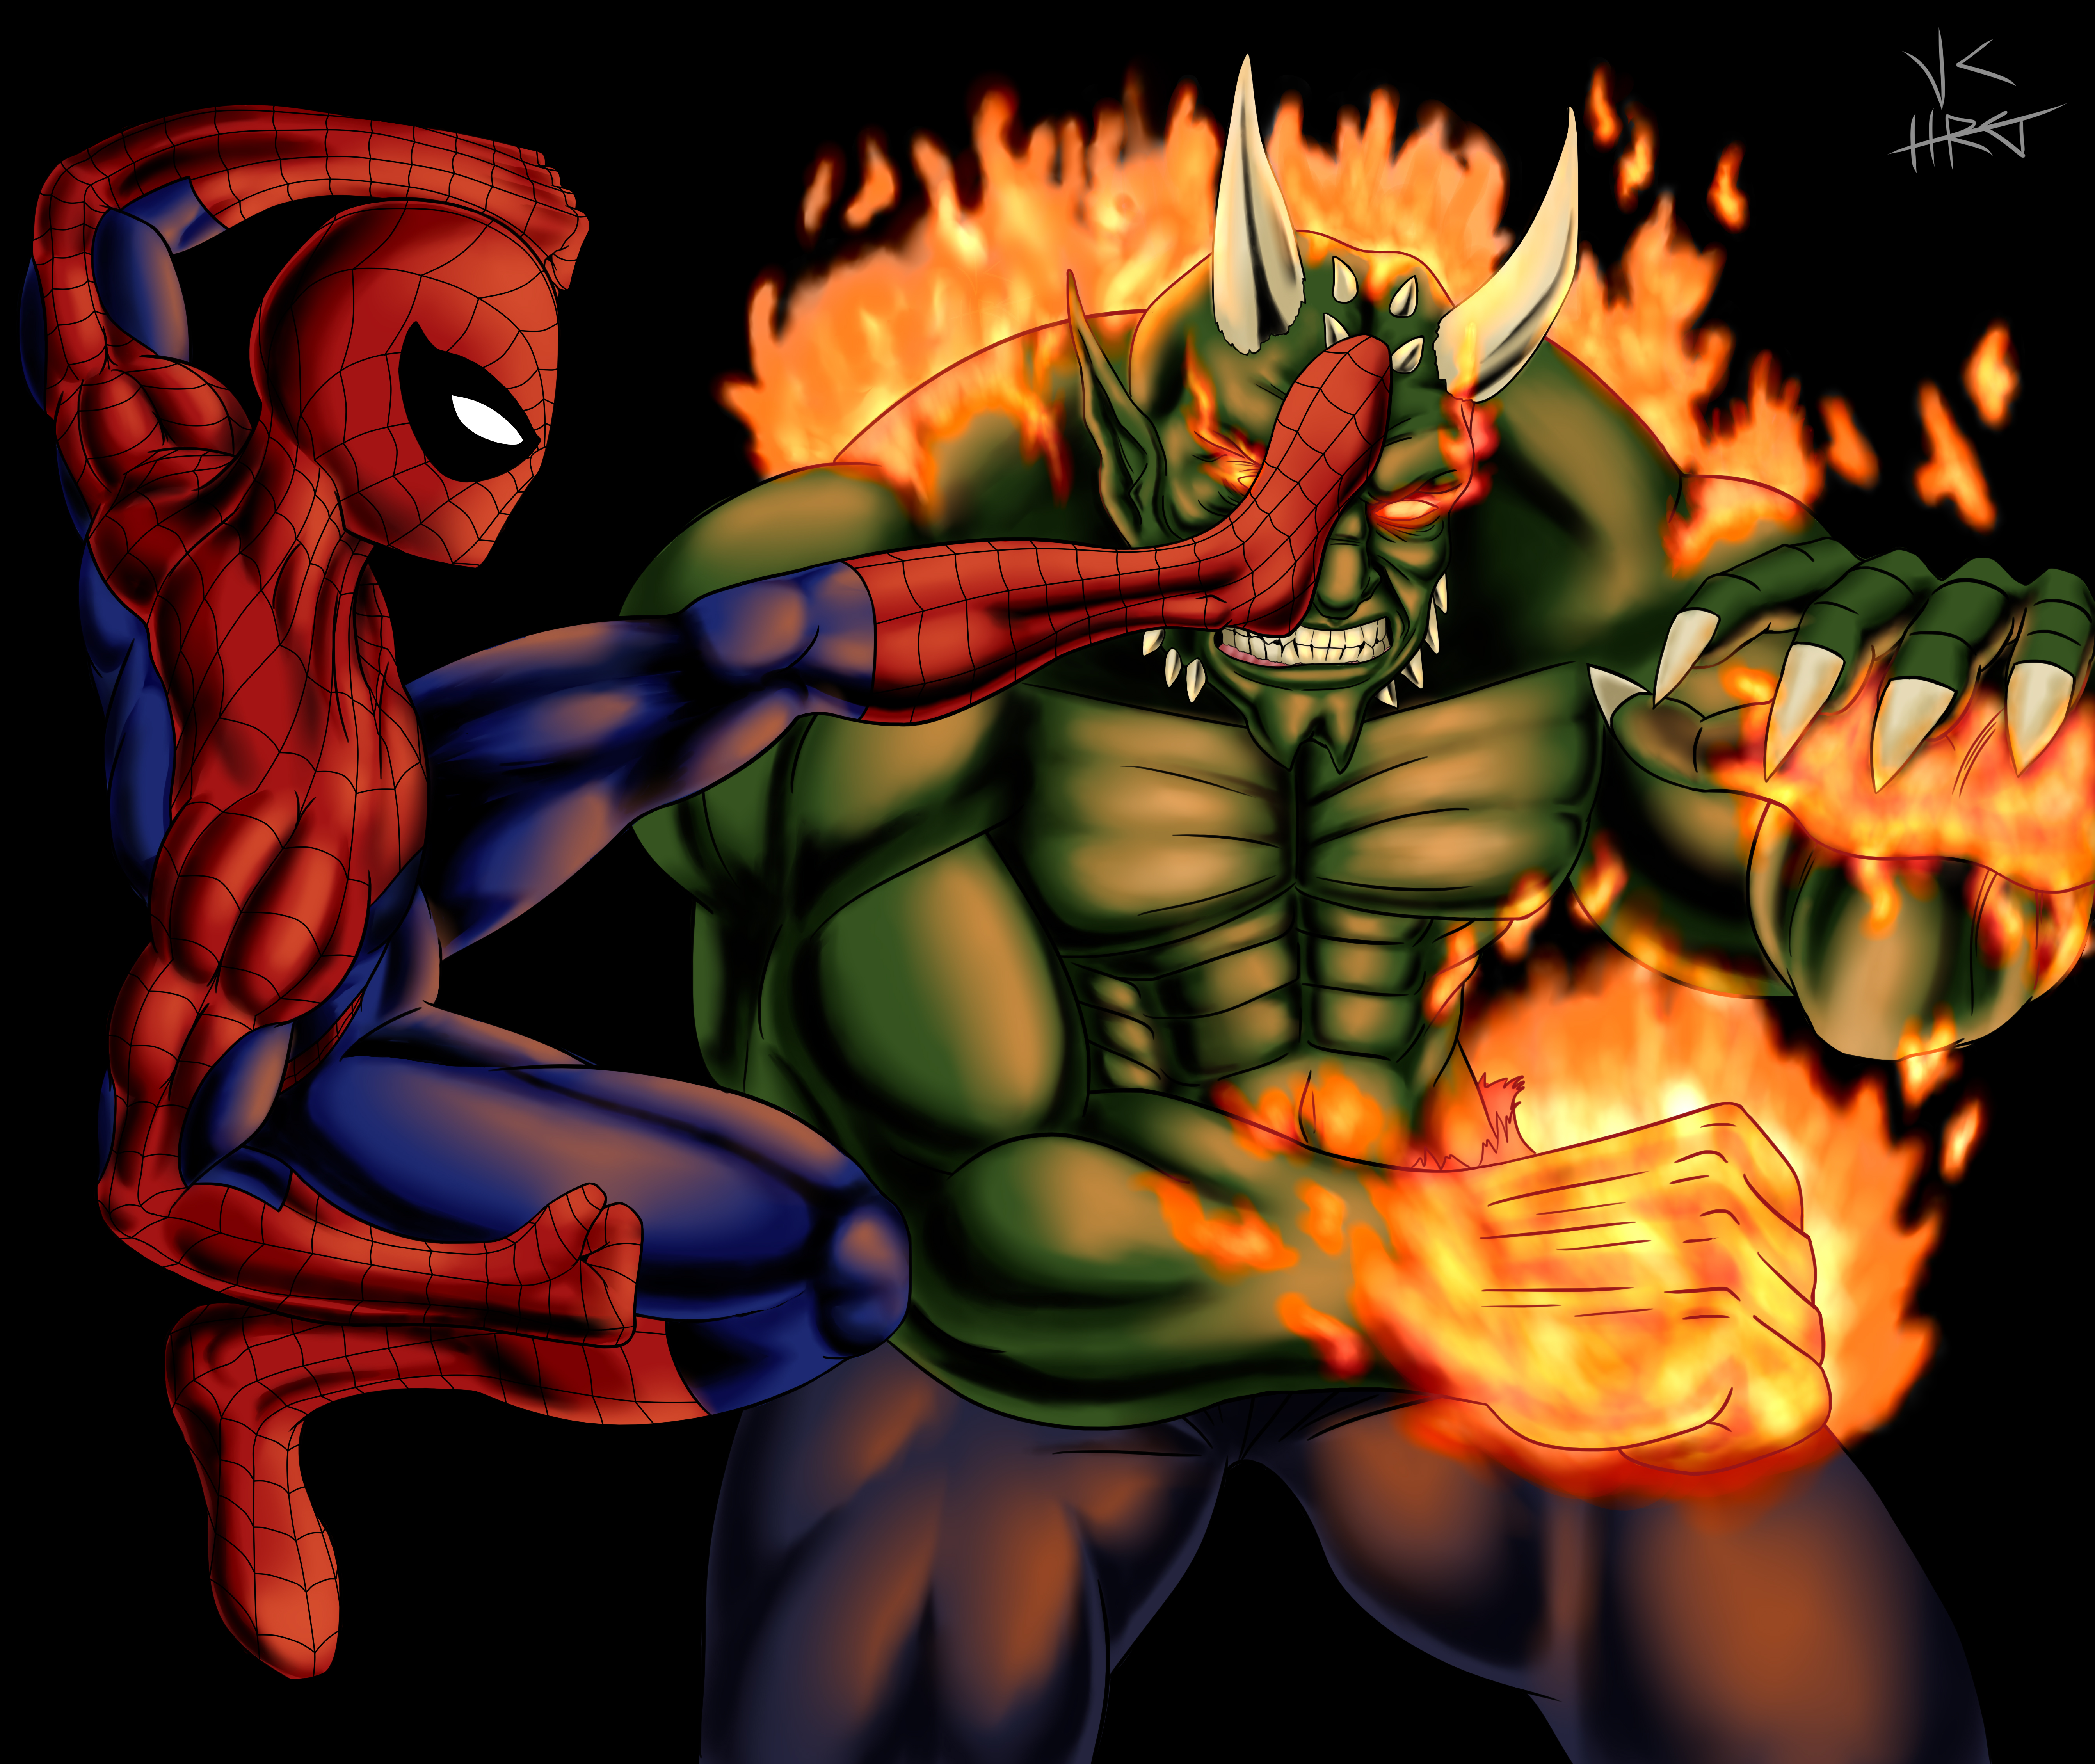 Ultimate Spiderman vs Green Goblin by JCHrg on DeviantArt